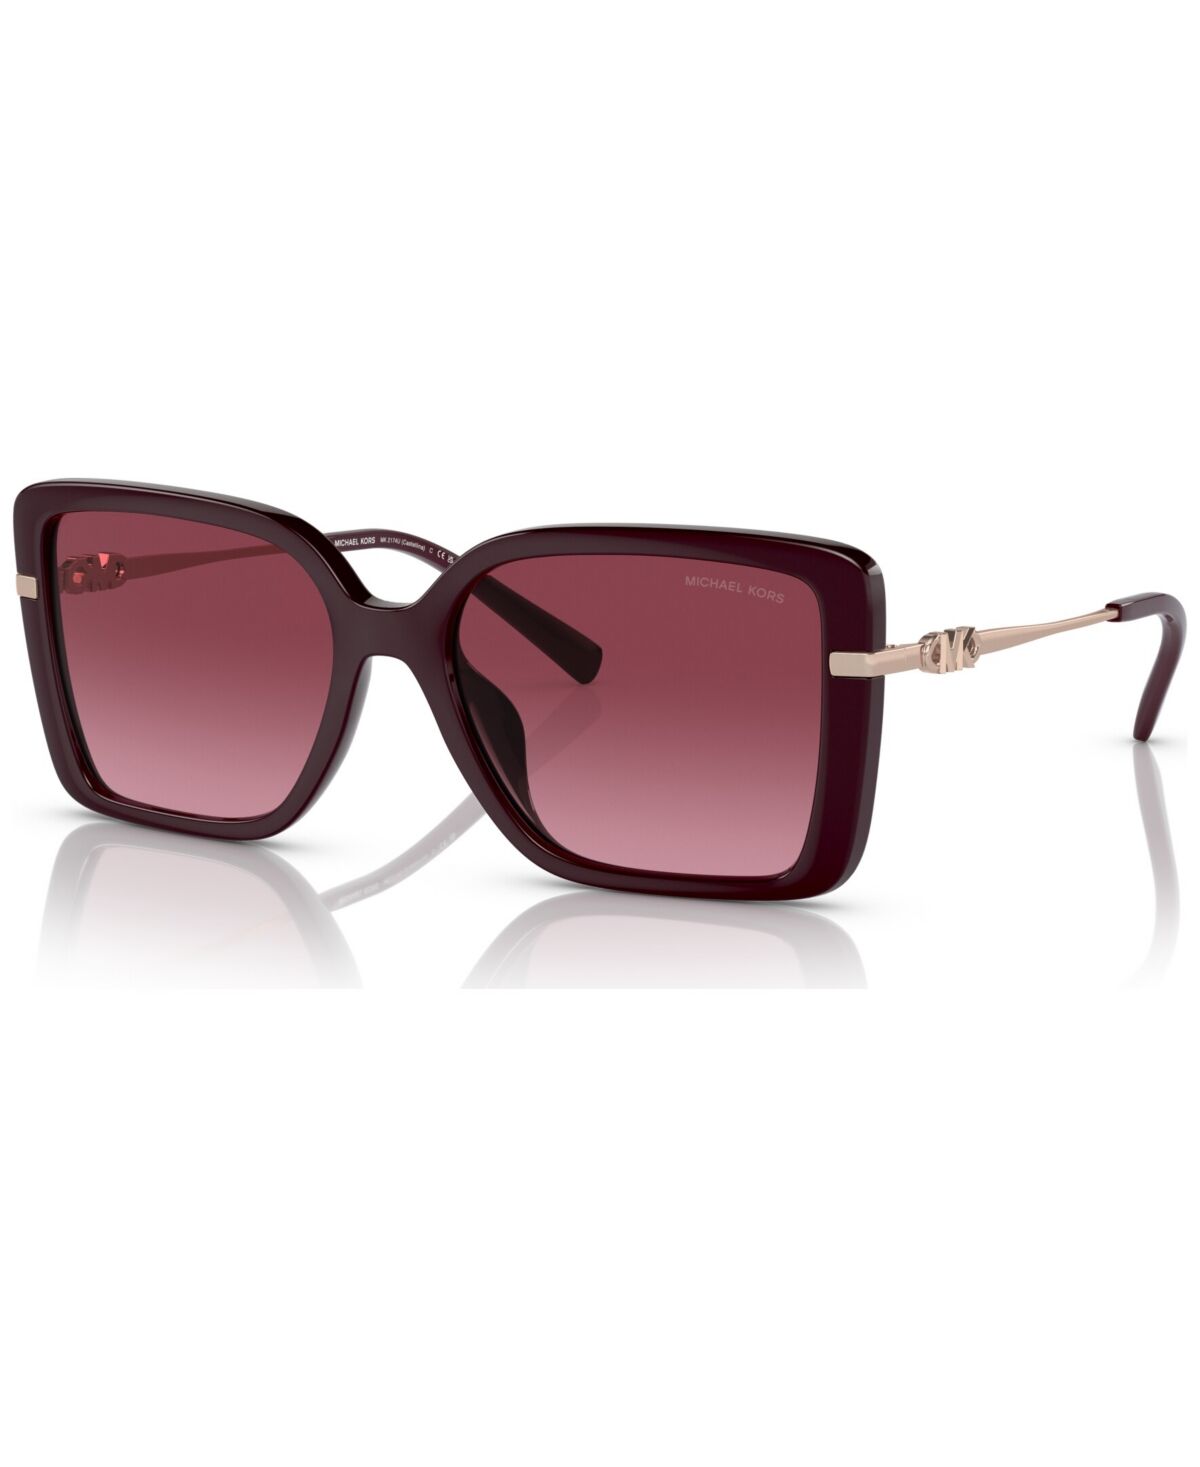 Michael Kors Women's Sunglasses, Castellina MK2174U - Cordovan